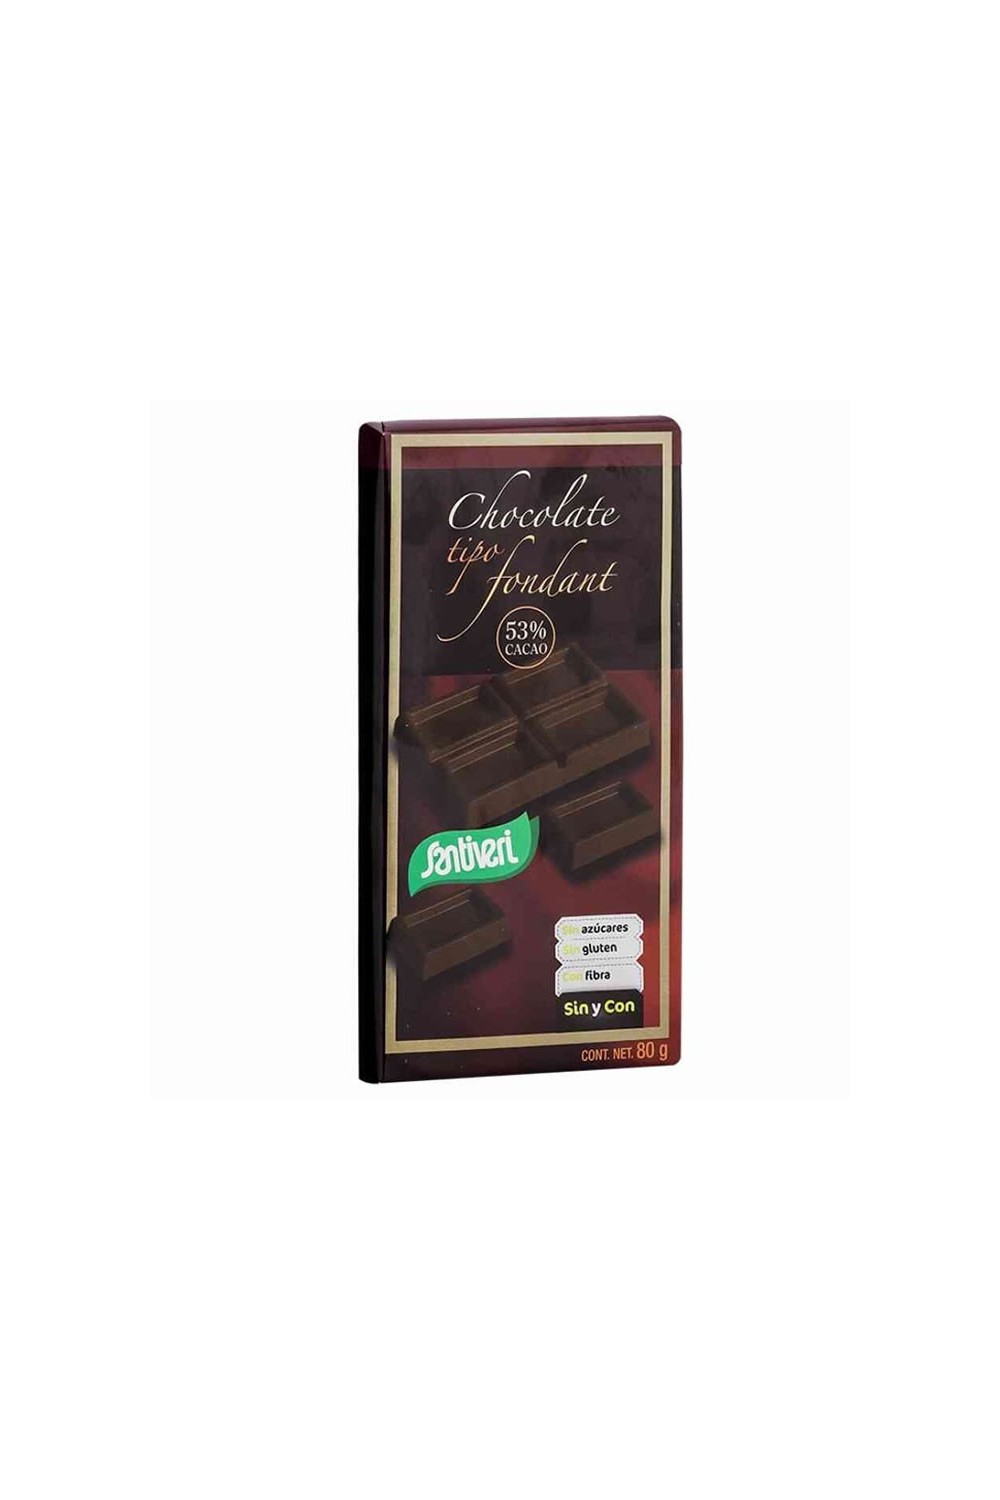 Santiveri Chocolate Fondant + Maltitol 80g